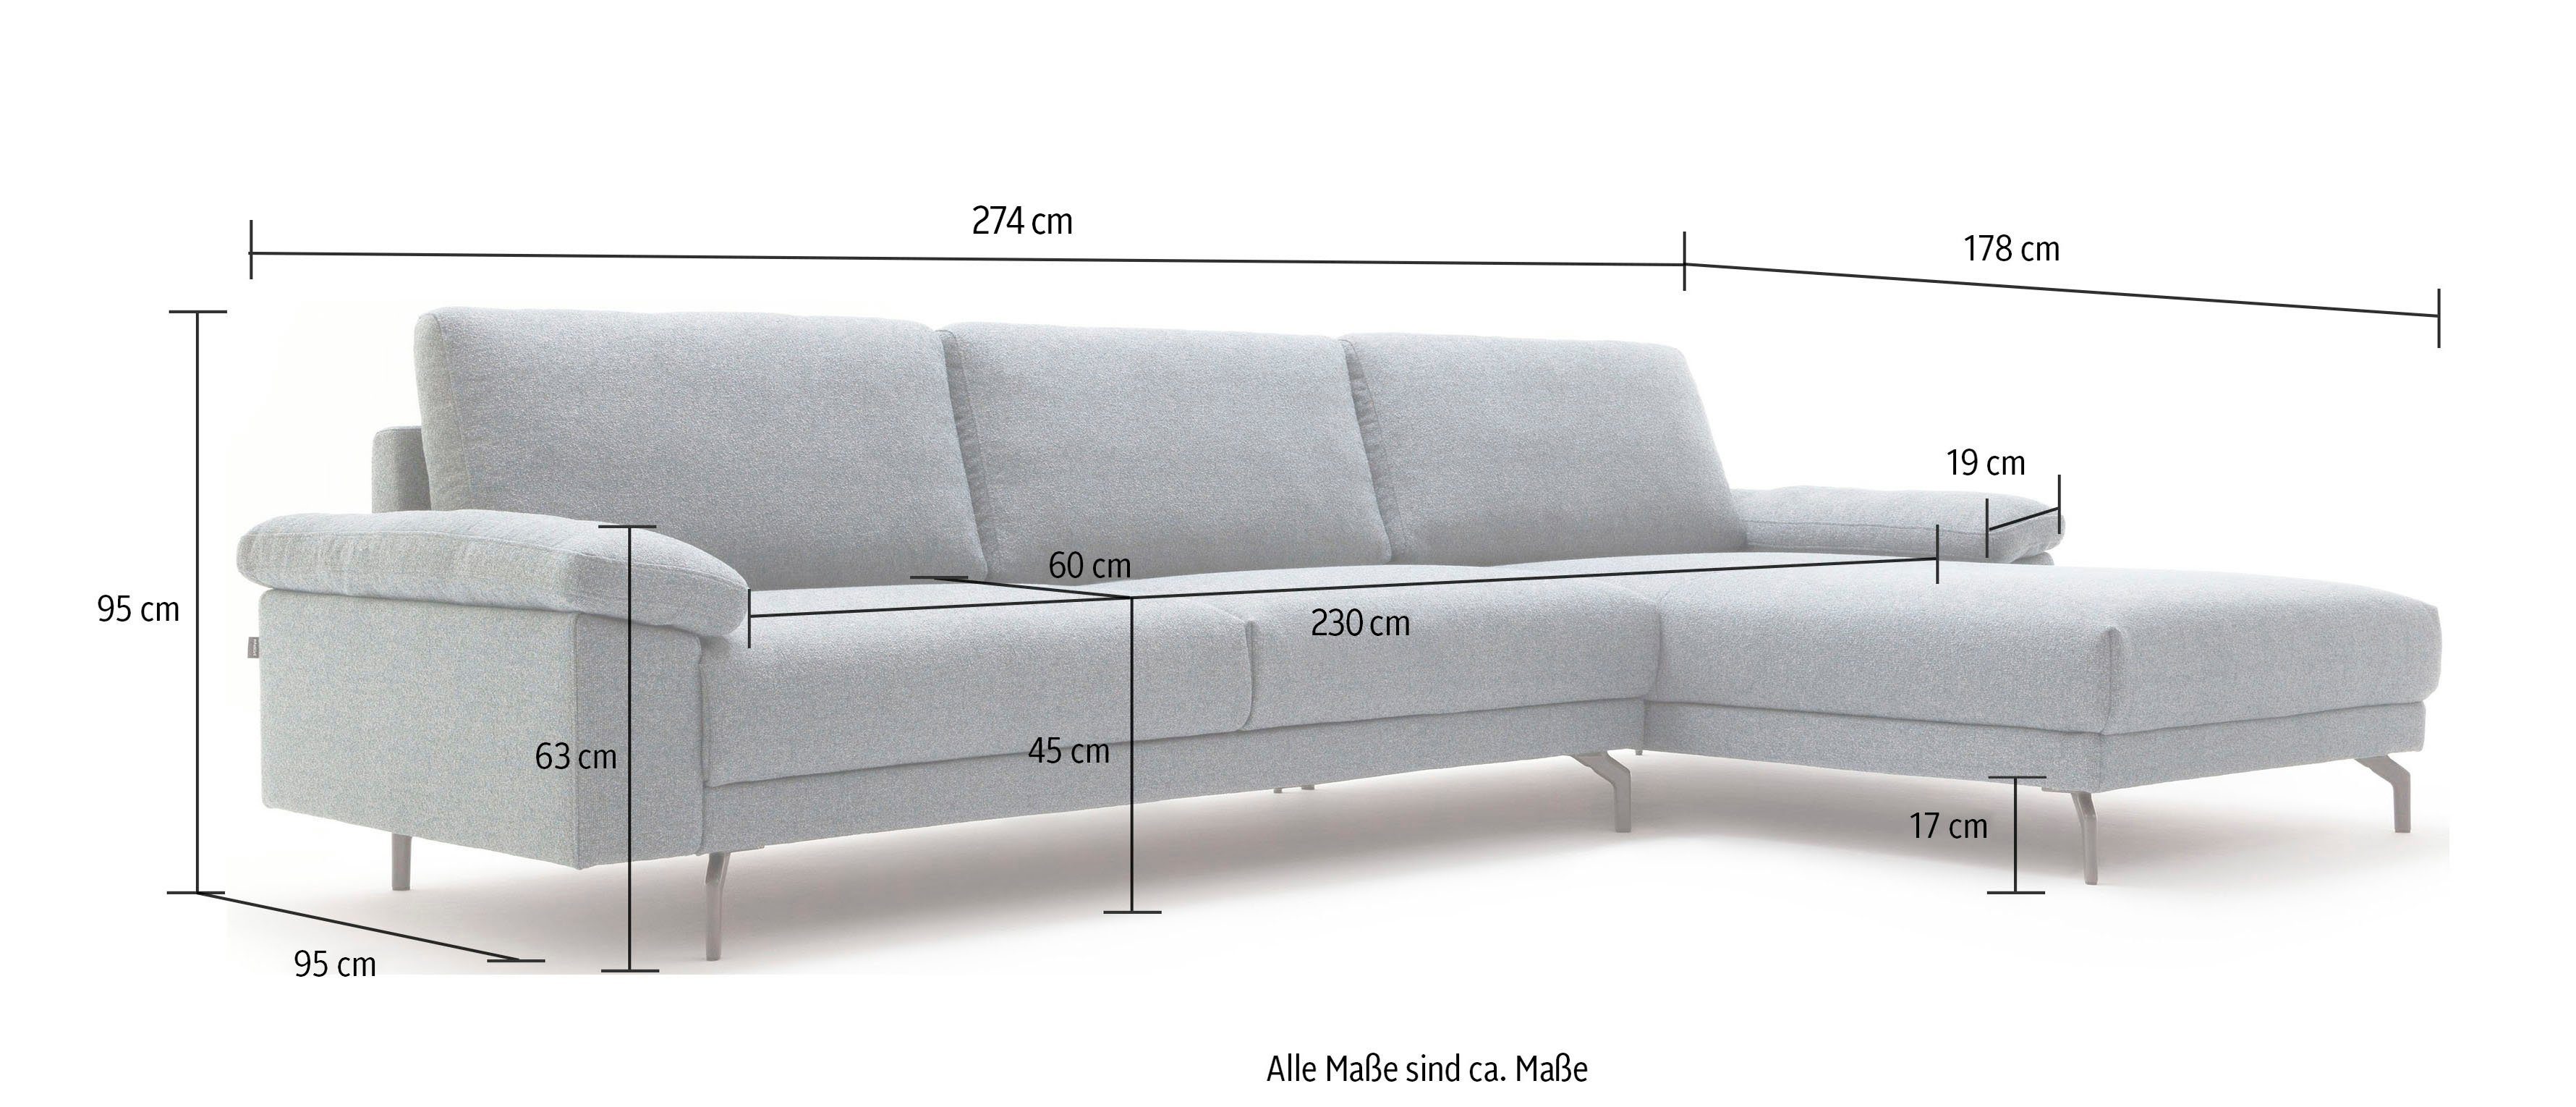 sofa hülsta Ecksofa hs.450